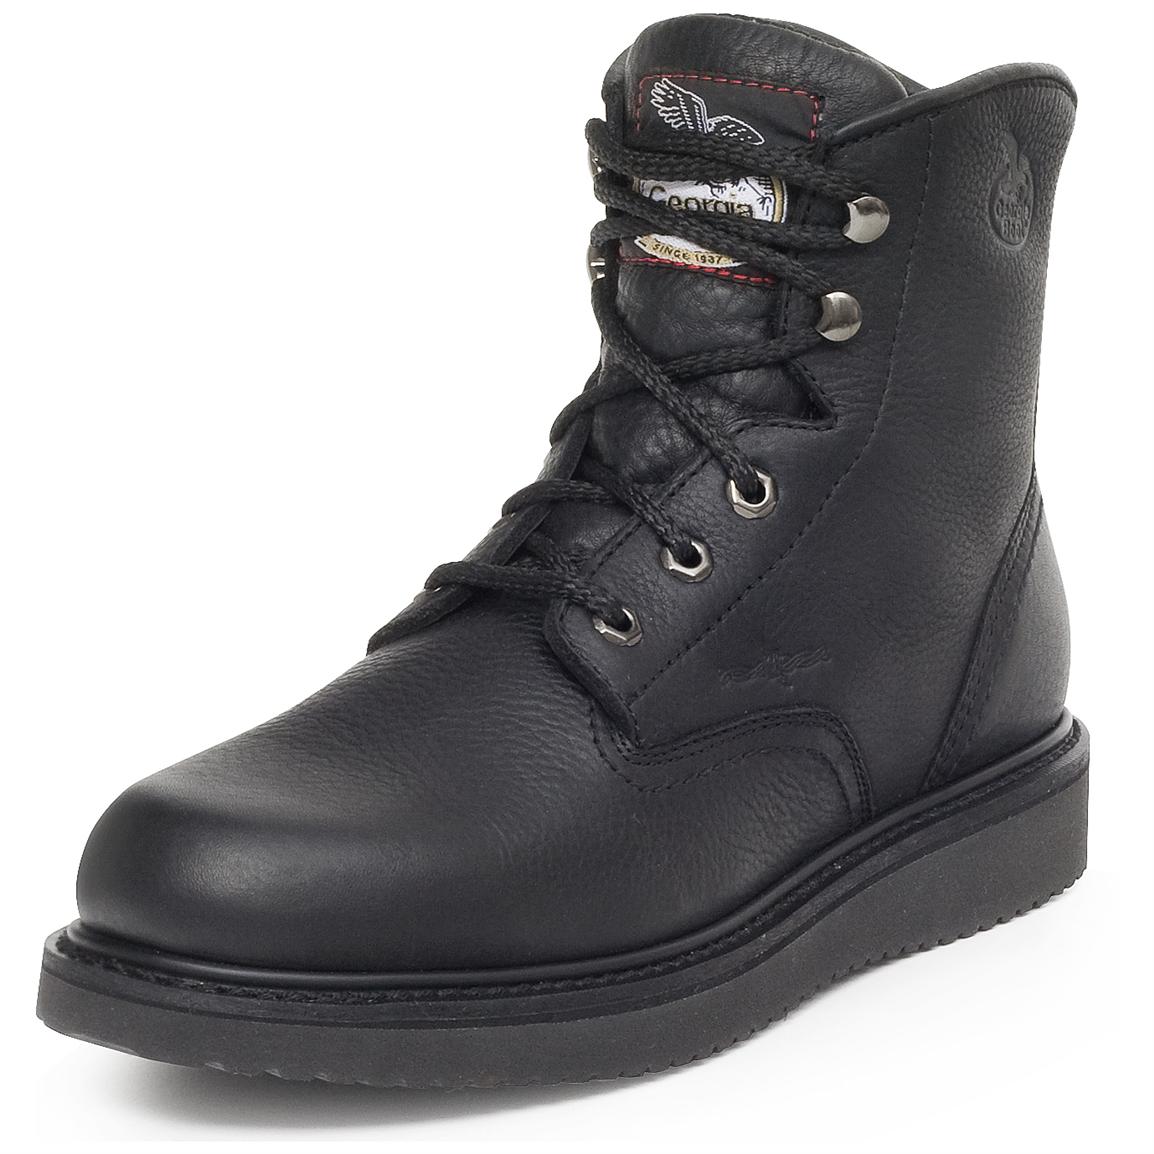 black wedge work boots